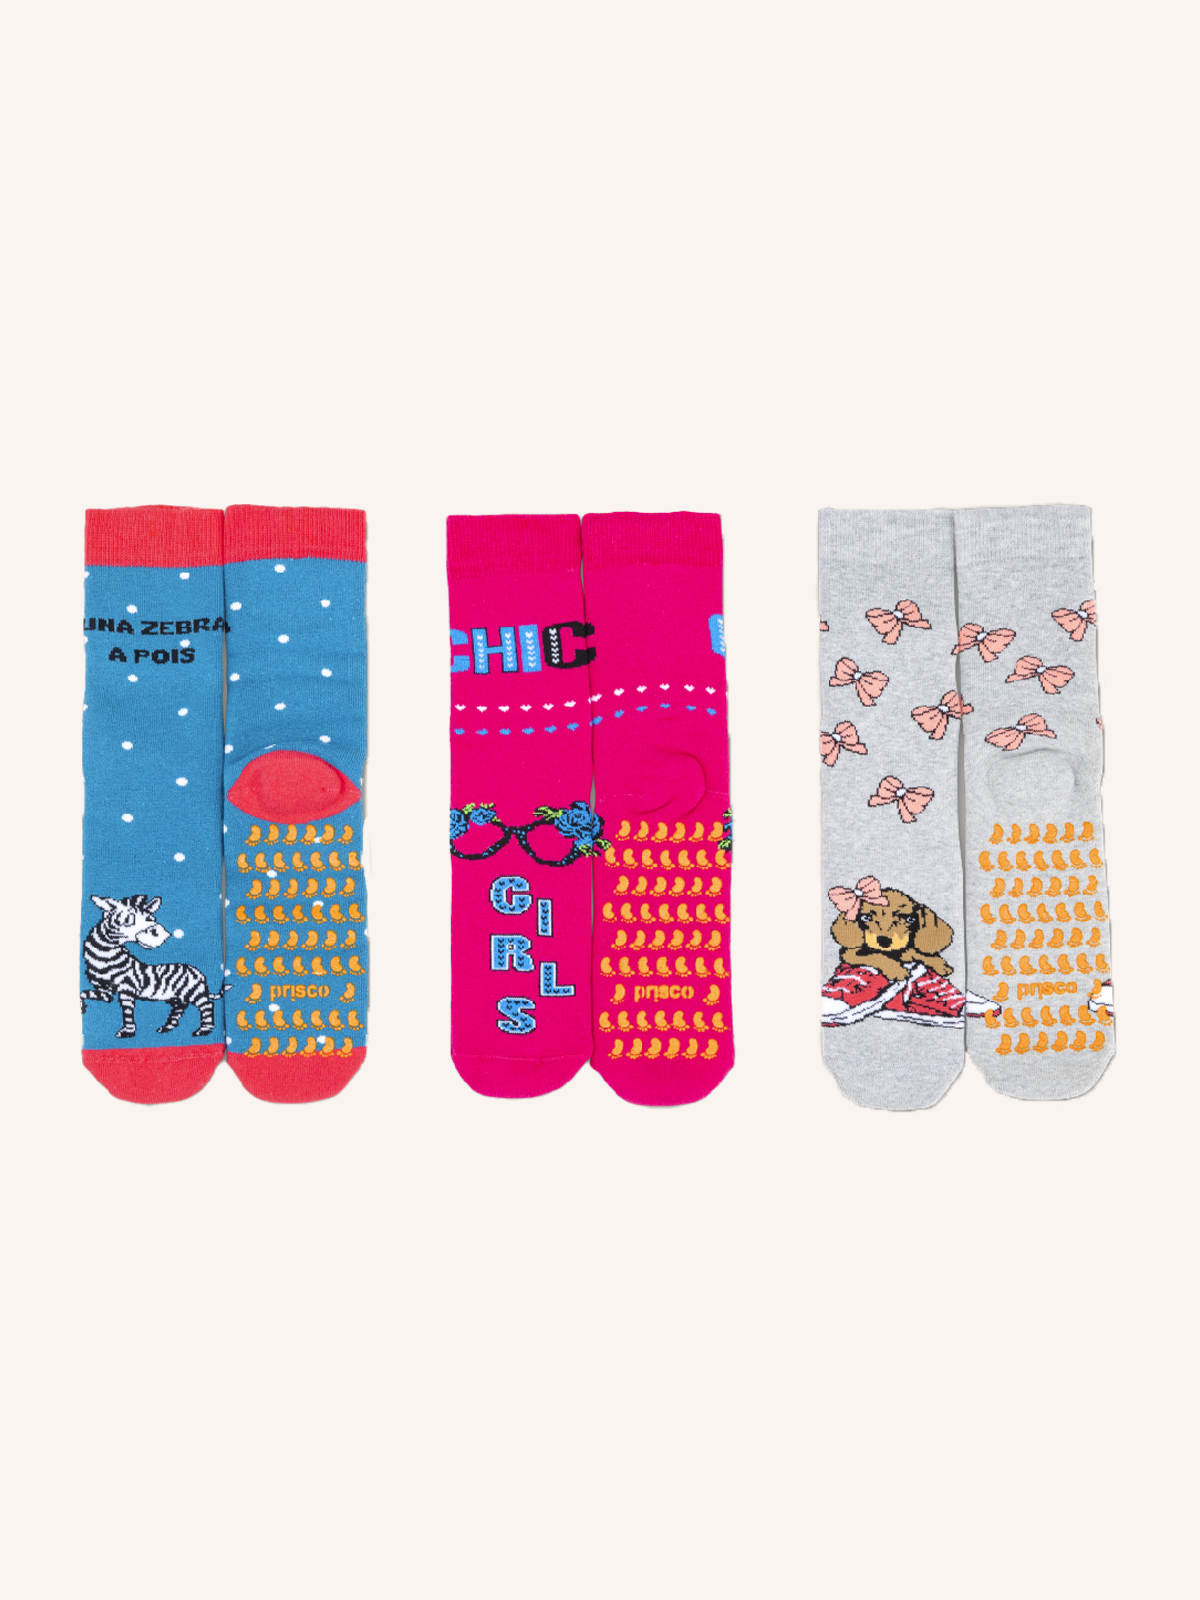 Cotton Anti-Slip Socks for Child | Pack of 3 Pairs | Priscotti B